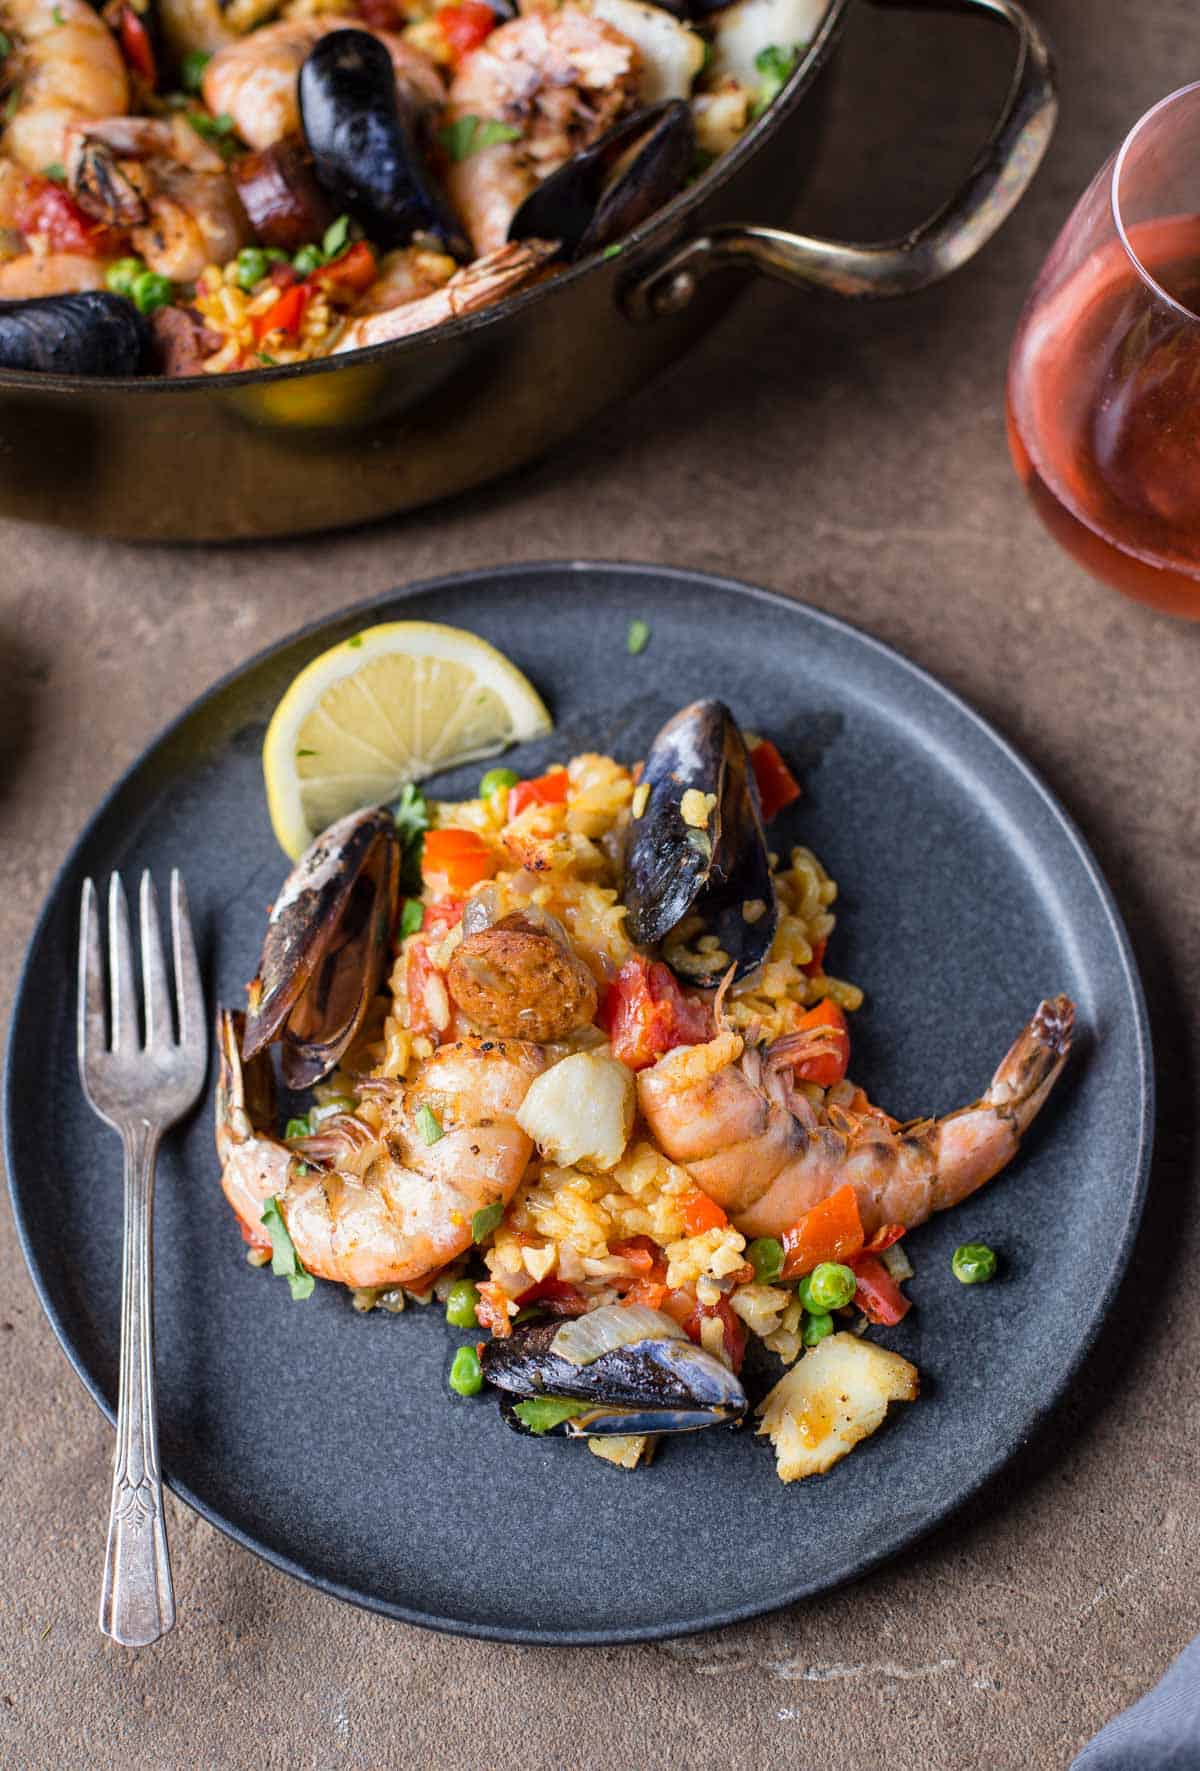 https://www.vindulge.com/wp-content/uploads/2021/02/A-plate-of-Seafood-Paella.jpg